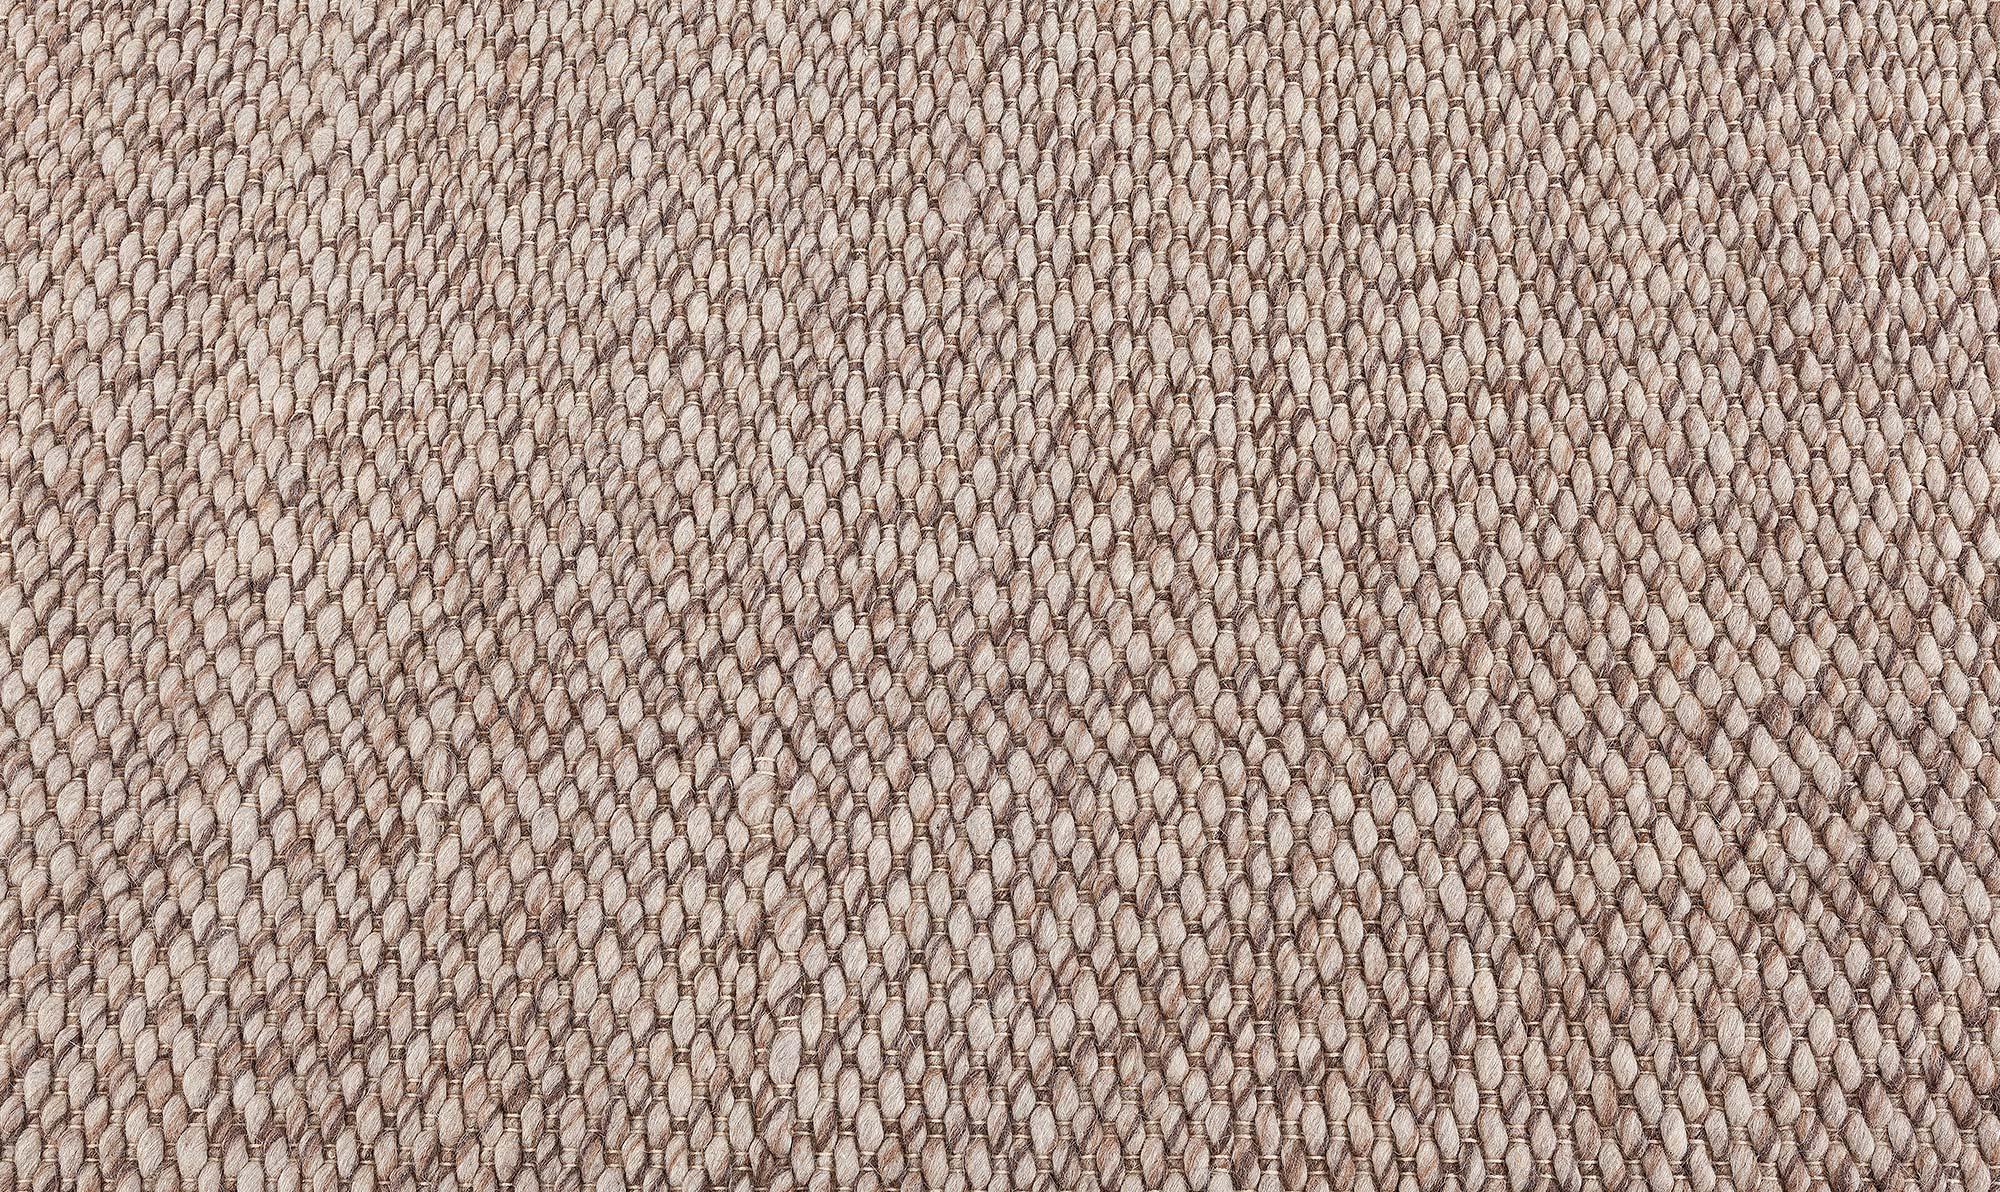 Contemporary brown handmade wool Runner by Doris Lelie Blau
Size: 7'8